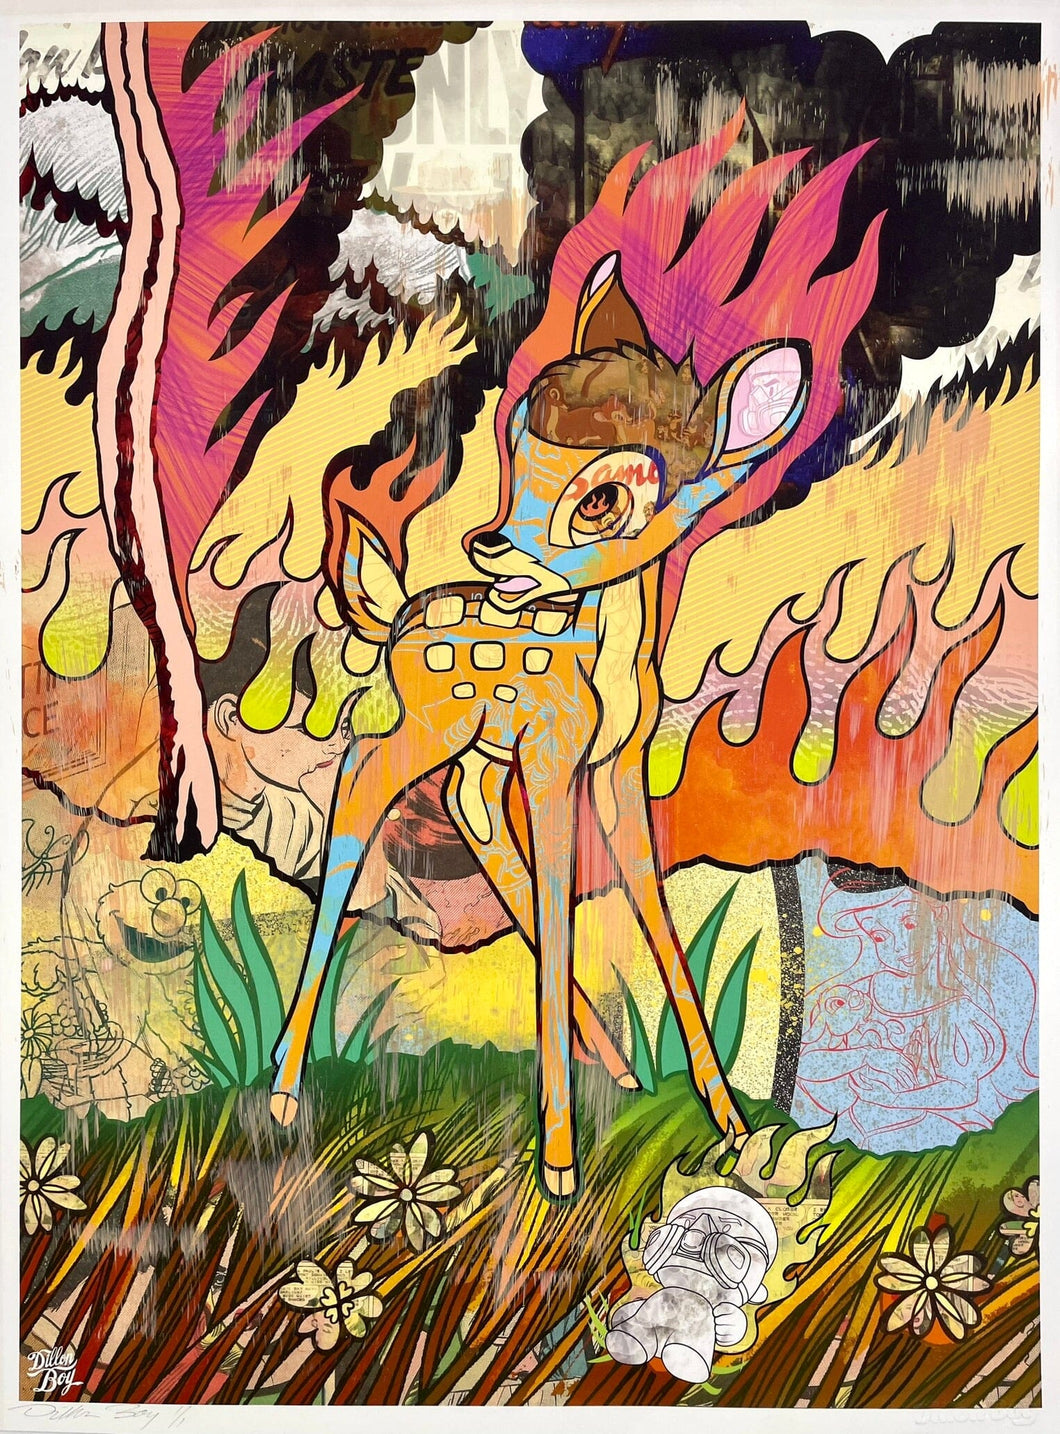 Disney Bambi x California Wildfire Print - Hand Embellished Dillon Boy